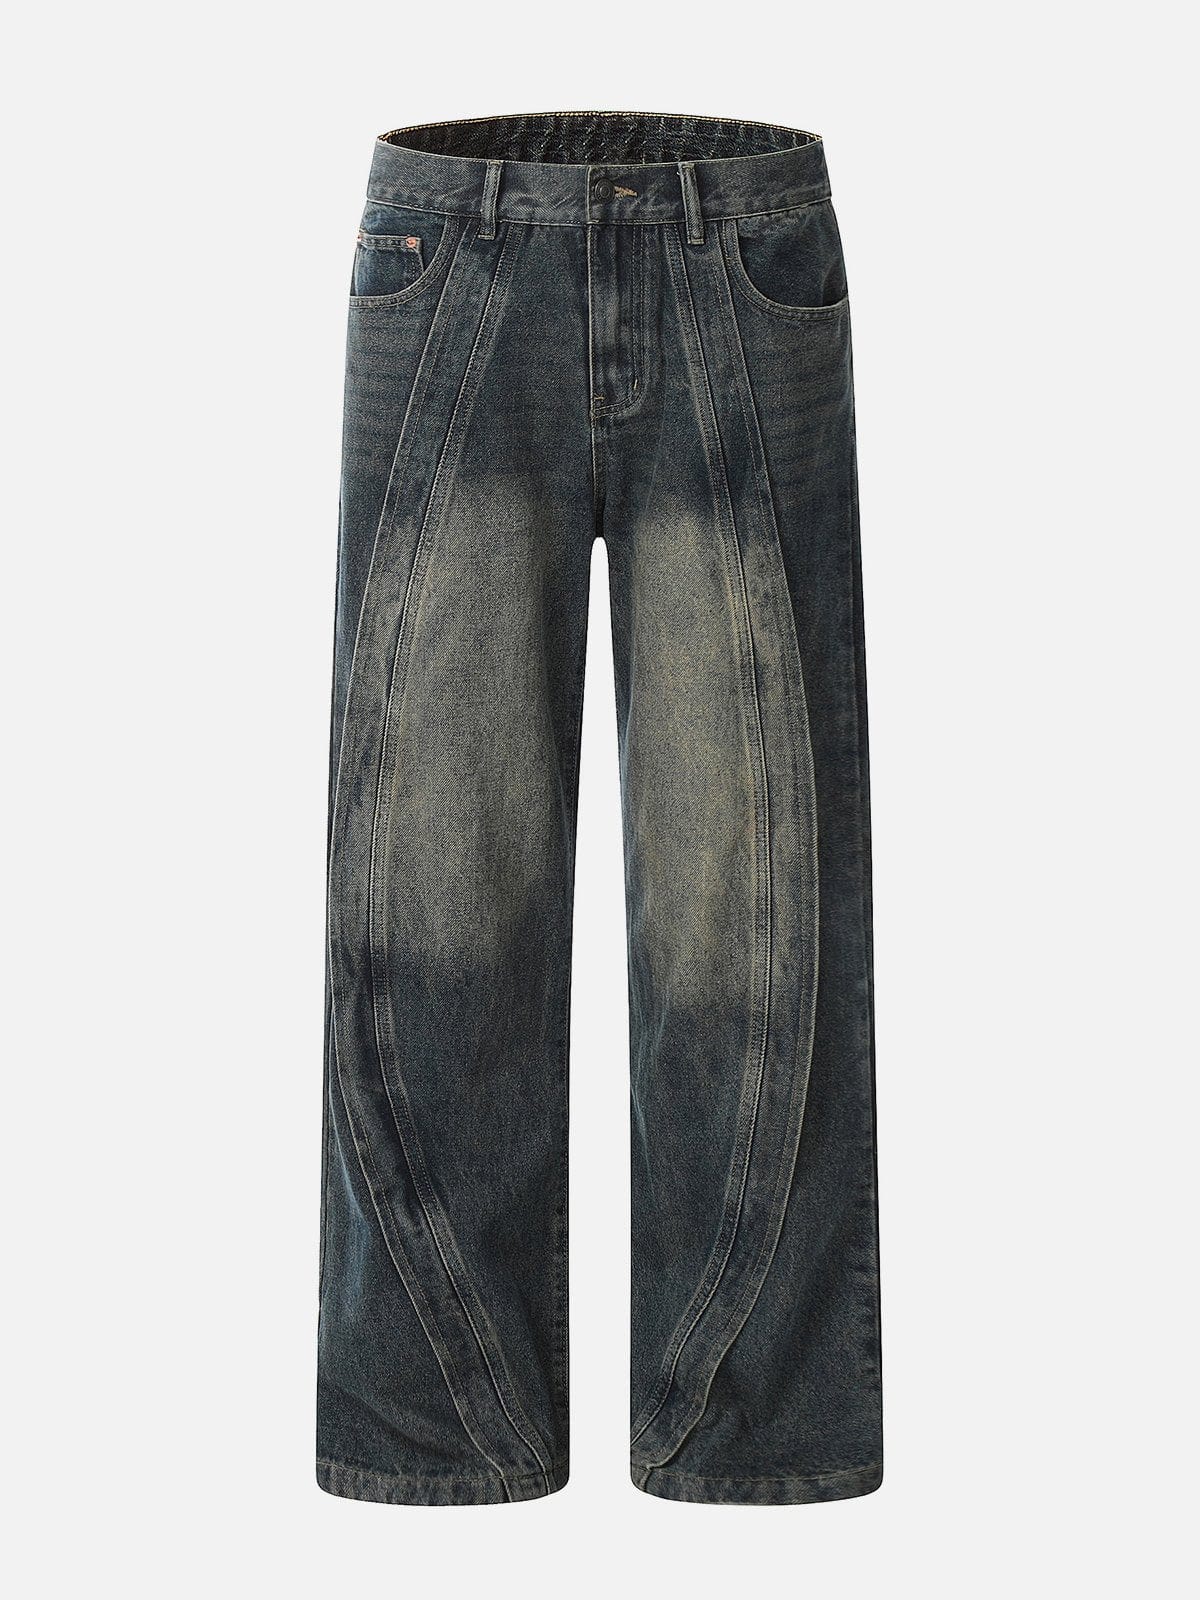 NEV Symmetrical Washed Jeans